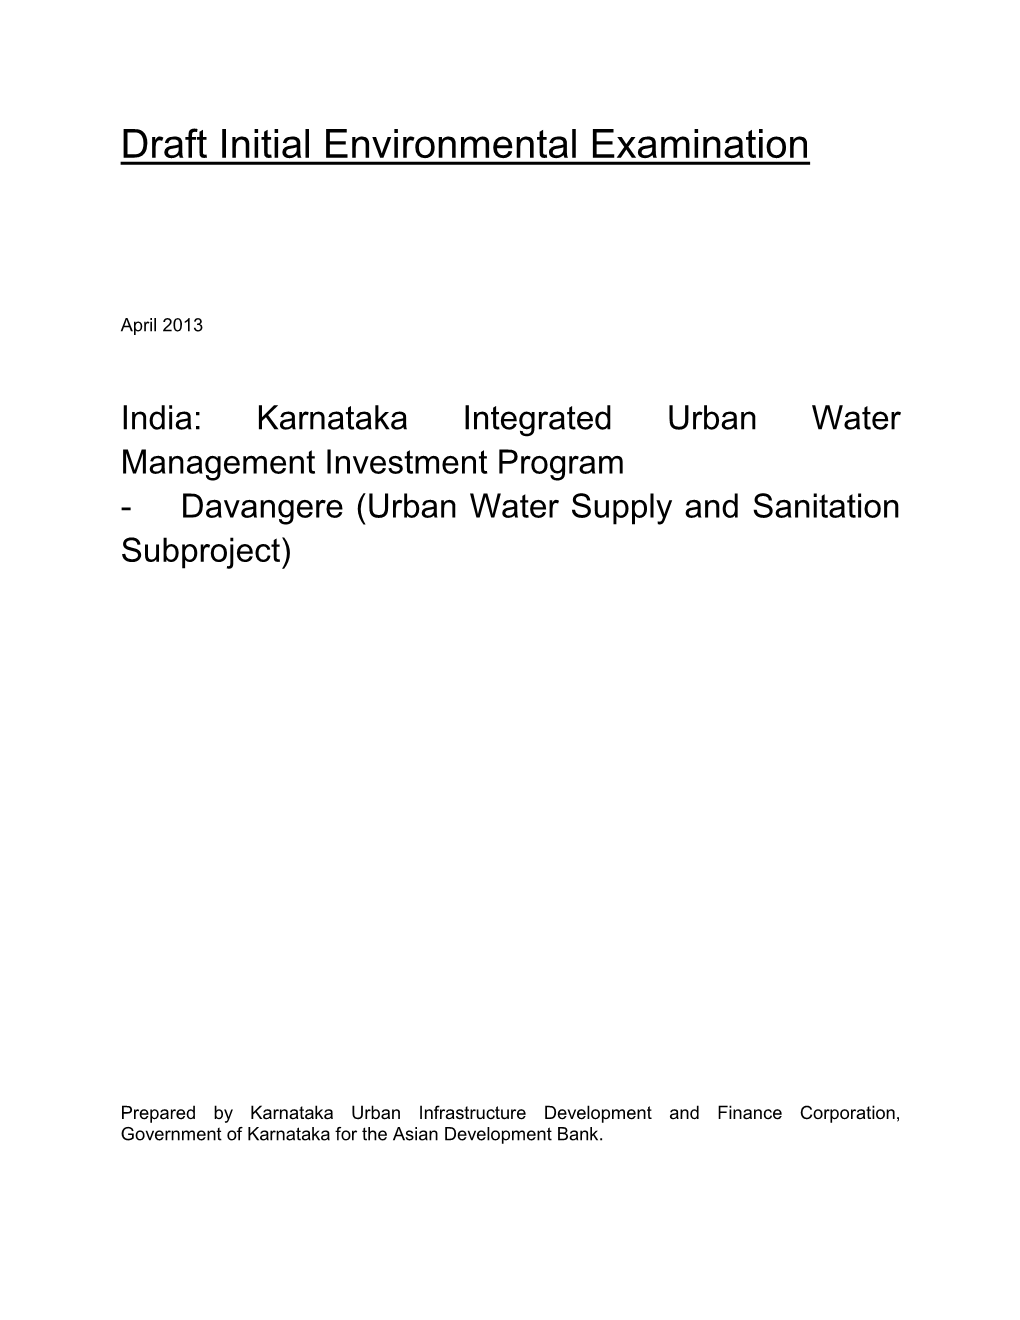 Karnataka Integrated Urban Water Management Investment Program - Davangere (Urban Water Supply and Sanitation Subproject)